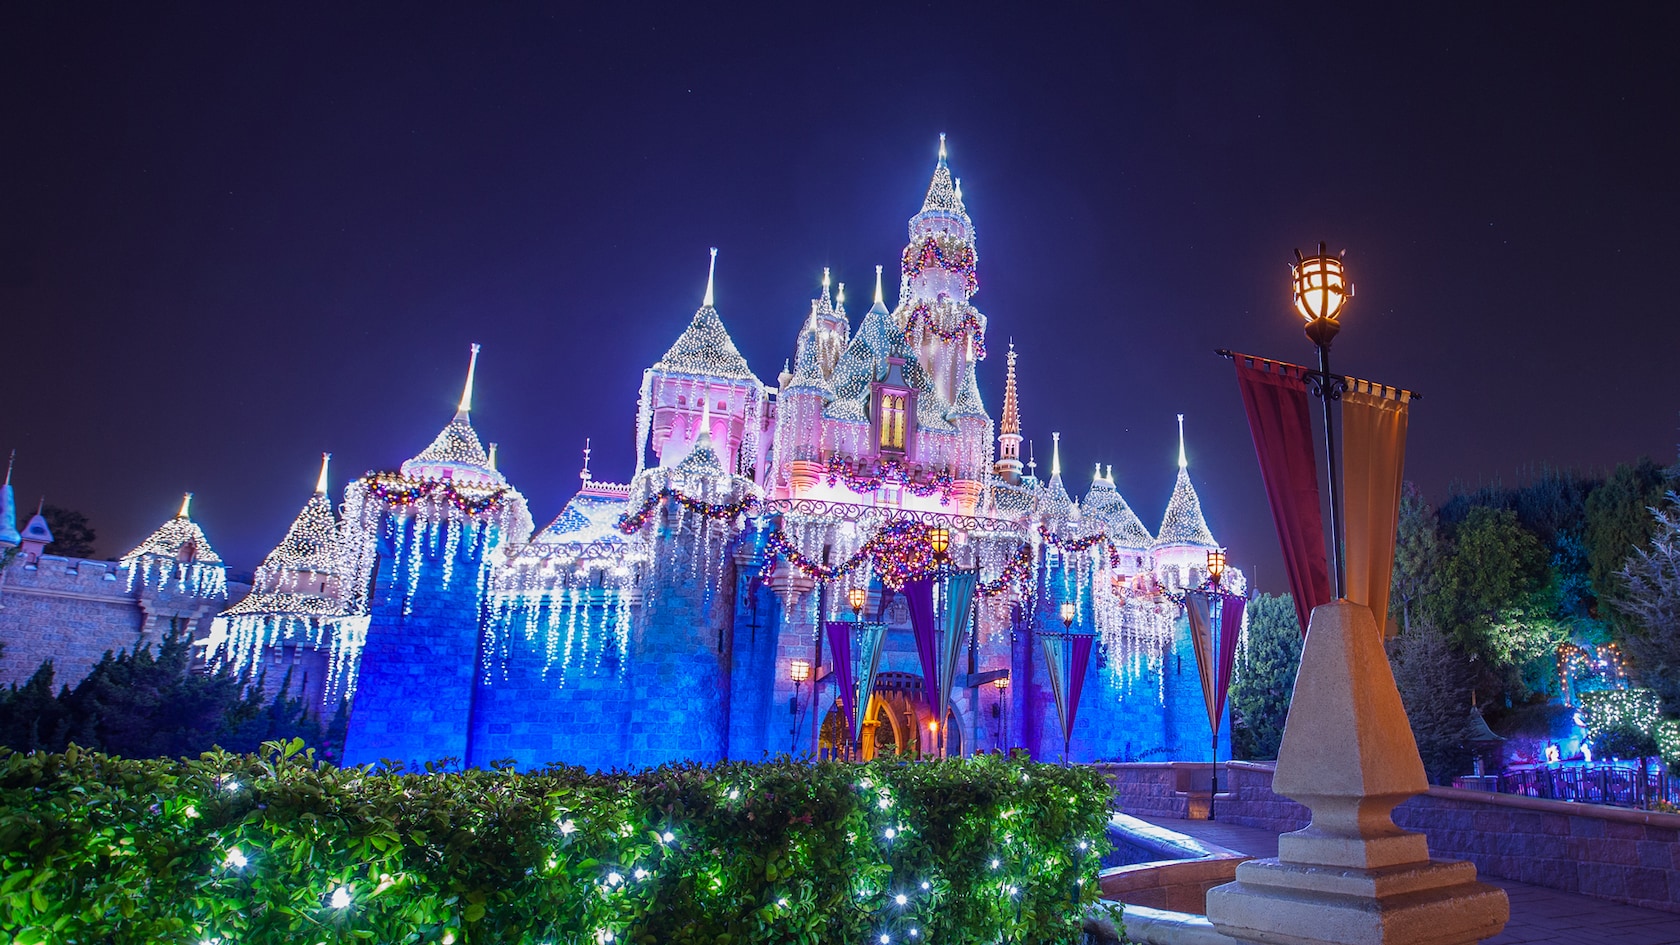 Holiday Decor & Christmas Lighting at Disneyland Resort